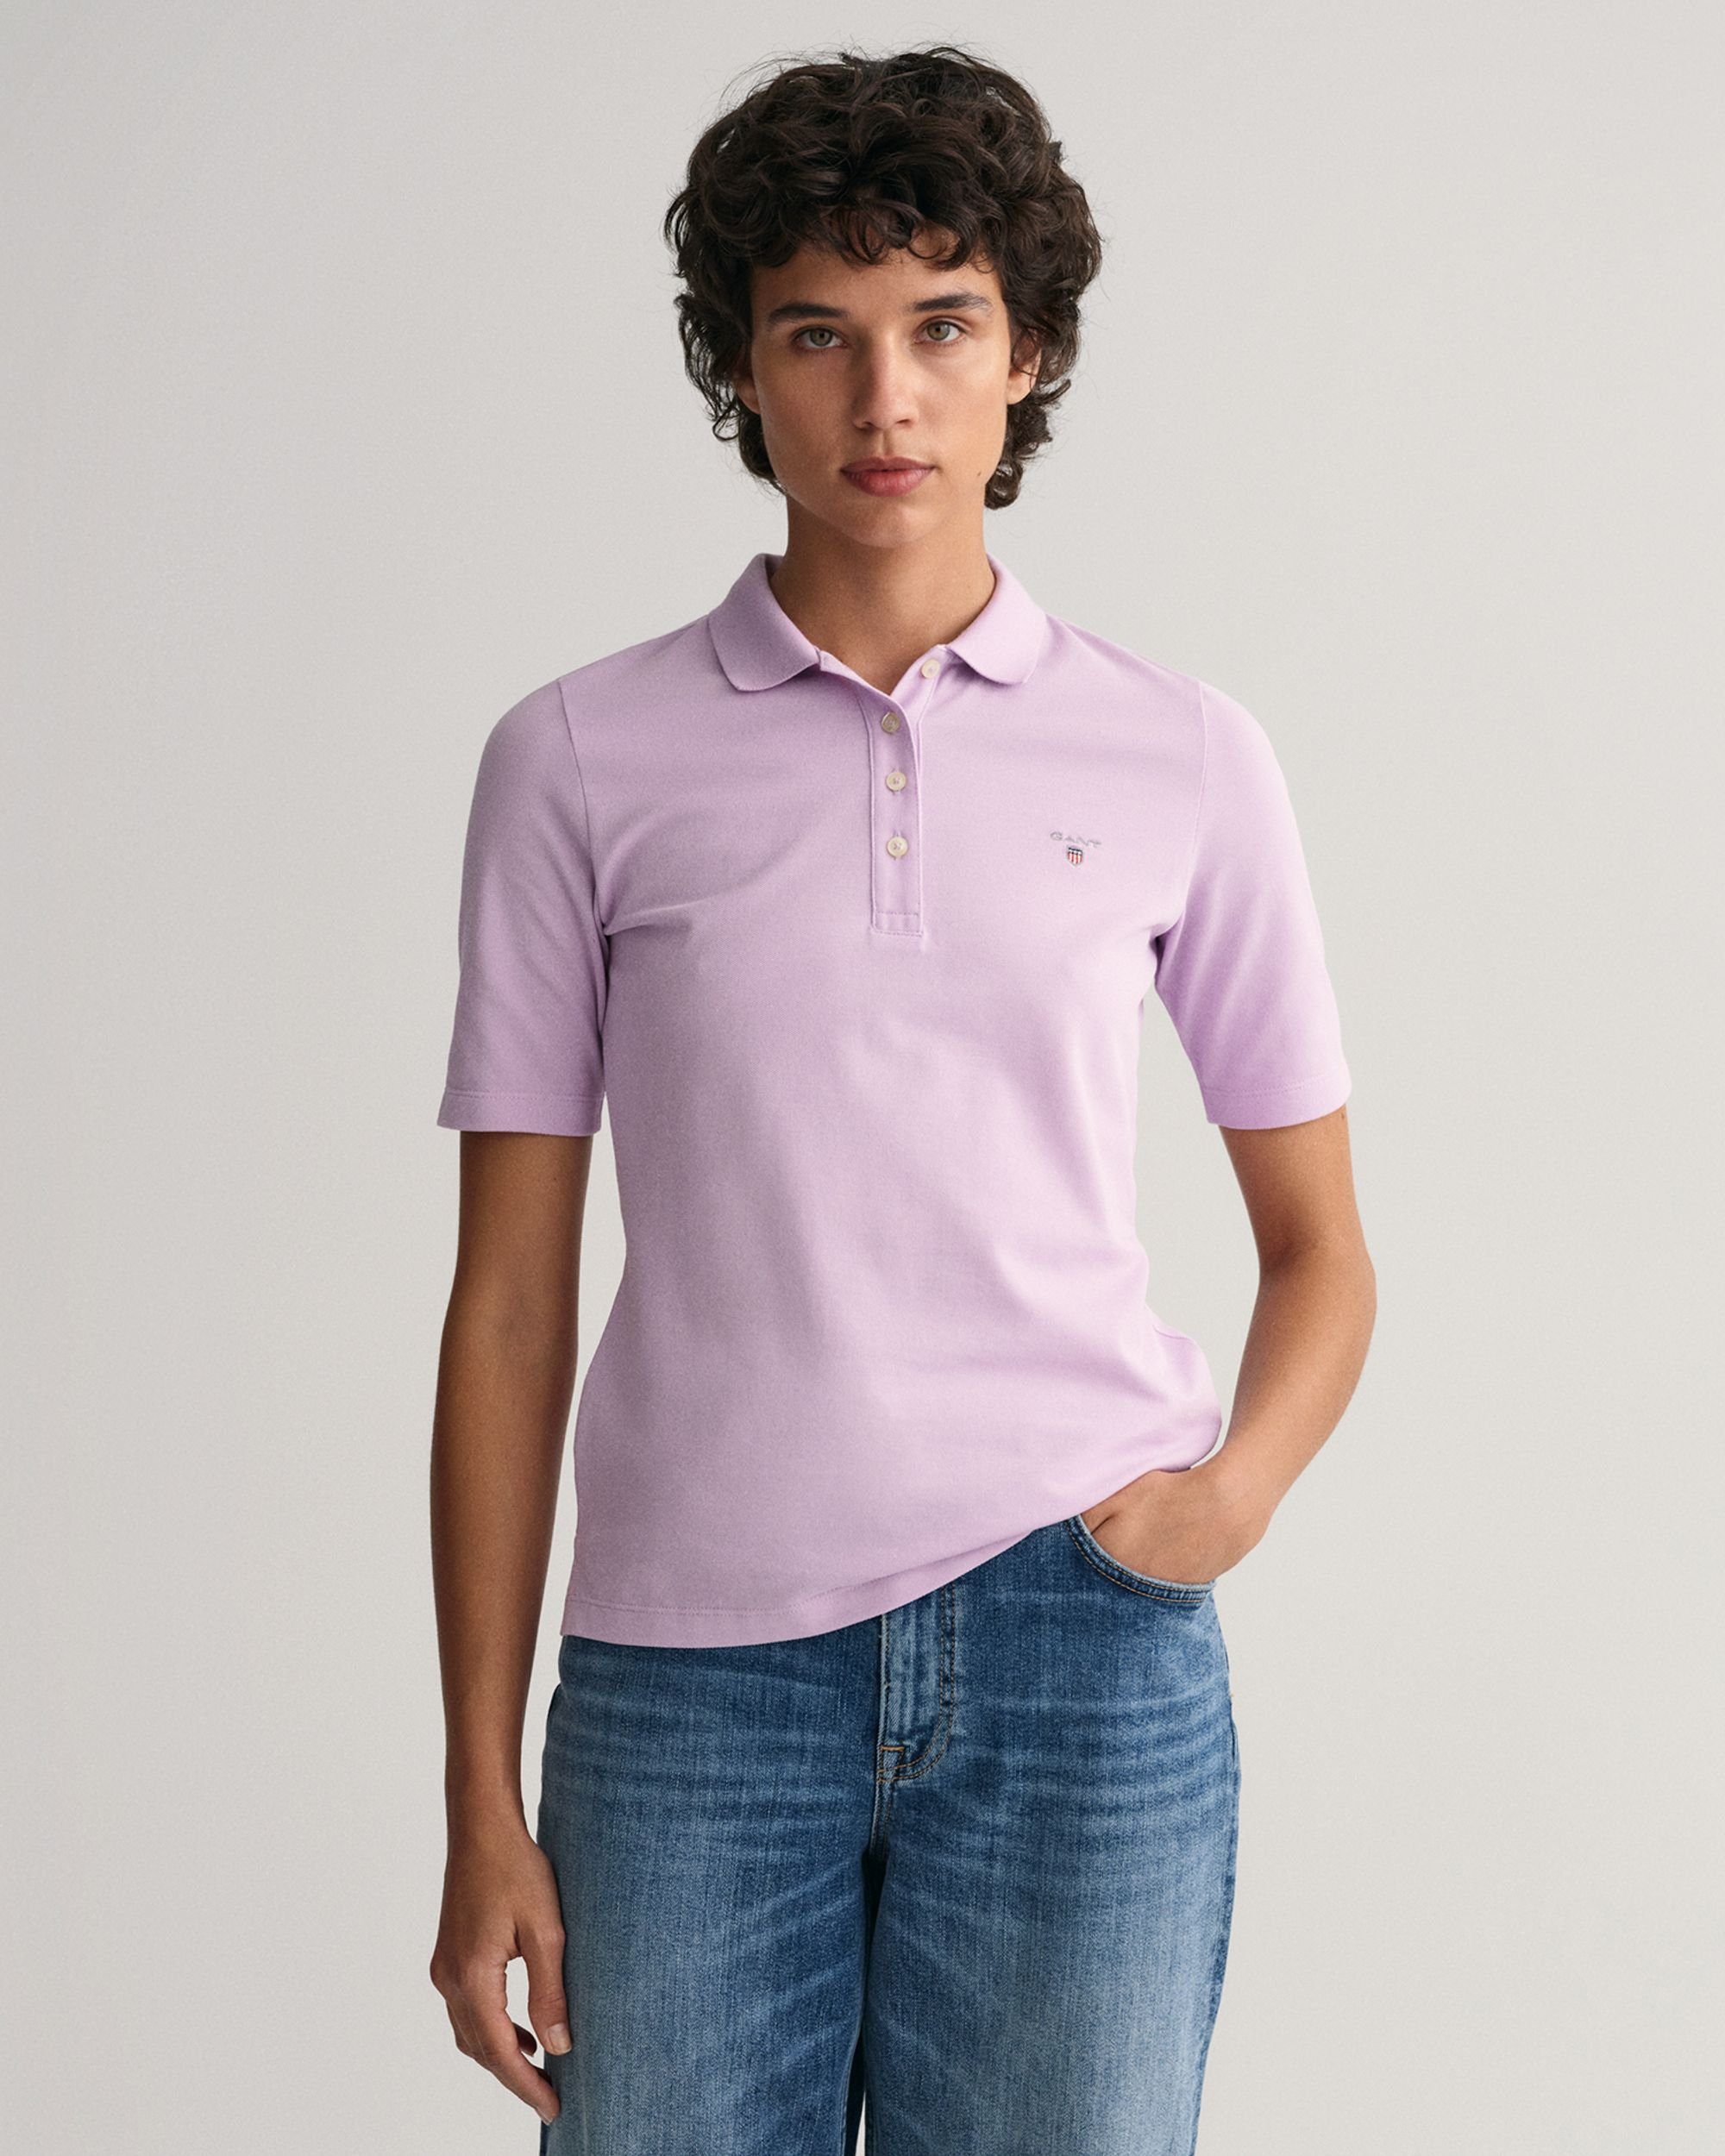 Piqué Original längerem Businessshirt lilac mit Gant soothing Arm Poloshirt